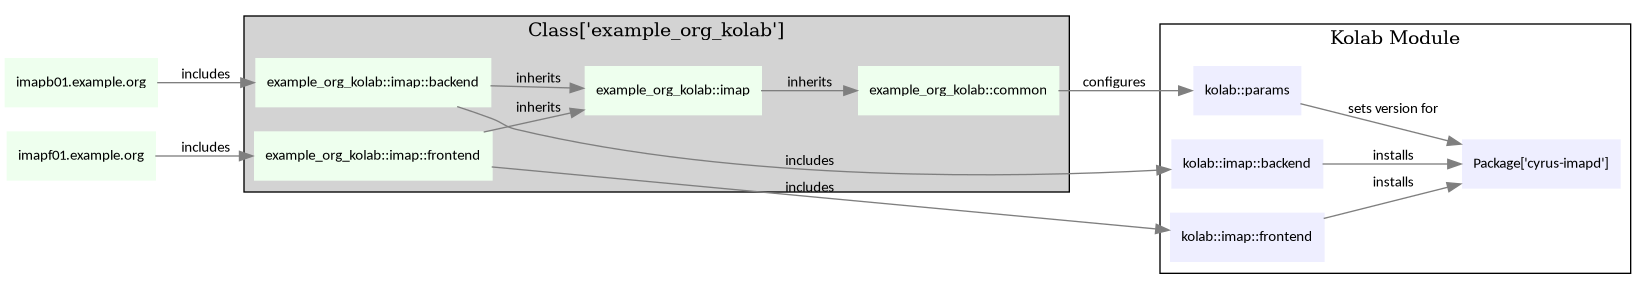 digraph {
        rankdir = LR;
        splines = true;
        overlab = prism;

        edge [color=gray50, fontname=Calibri, fontsize=11];
        node [shape=record, fontname=Calibri, fontsize=11, style=filled];

        "imapb01.example.org" [color="#EEFFEE"];
        "imapf01.example.org" [color="#EEFFEE"];

        subgraph cluster_example_org_kolab {
                label = "Class['example_org_kolab']";
                style = filled;

                "example_org_kolab::common" [color="#EEFFEE"];
                "example_org_kolab::imap" [color="#EEFFEE"];
                "example_org_kolab::imap::backend" [color="#EEFFEE"];
                "example_org_kolab::imap::frontend" [color="#EEFFEE"];

                "example_org_kolab::imap::backend" -> "example_org_kolab::imap" [label="inherits"];
                "example_org_kolab::imap::frontend" -> "example_org_kolab::imap" [label="inherits"];
                "example_org_kolab::imap" -> "example_org_kolab::common" [label="inherits"];
            }

        subgraph cluster_module_kolab {
                label = "Kolab Module";

                "kolab::imap::backend" [color="#EEEEFF"];
                "kolab::imap::frontend" [color="#EEEEFF"];
                "kolab::params" [color="#EEEEFF"];

                "Package['cyrus-imapd']" [color="#EEEEFF"];

            }

        "example_org_kolab::common" -> "kolab::params" [label="configures"];

        "imapb01.example.org" -> "example_org_kolab::imap::backend" [label="includes"];
        "example_org_kolab::imap::backend" -> "kolab::imap::backend" [label="includes"];

        "imapf01.example.org" -> "example_org_kolab::imap::frontend" [label="includes"];
        "example_org_kolab::imap::frontend" -> "kolab::imap::frontend" [label="includes"];

        "kolab::imap::backend" -> "Package['cyrus-imapd']" [label="installs"];
        "kolab::imap::frontend" -> "Package['cyrus-imapd']" [label="installs"];

        "kolab::params" -> "Package['cyrus-imapd']" [label="sets version for"];
    }